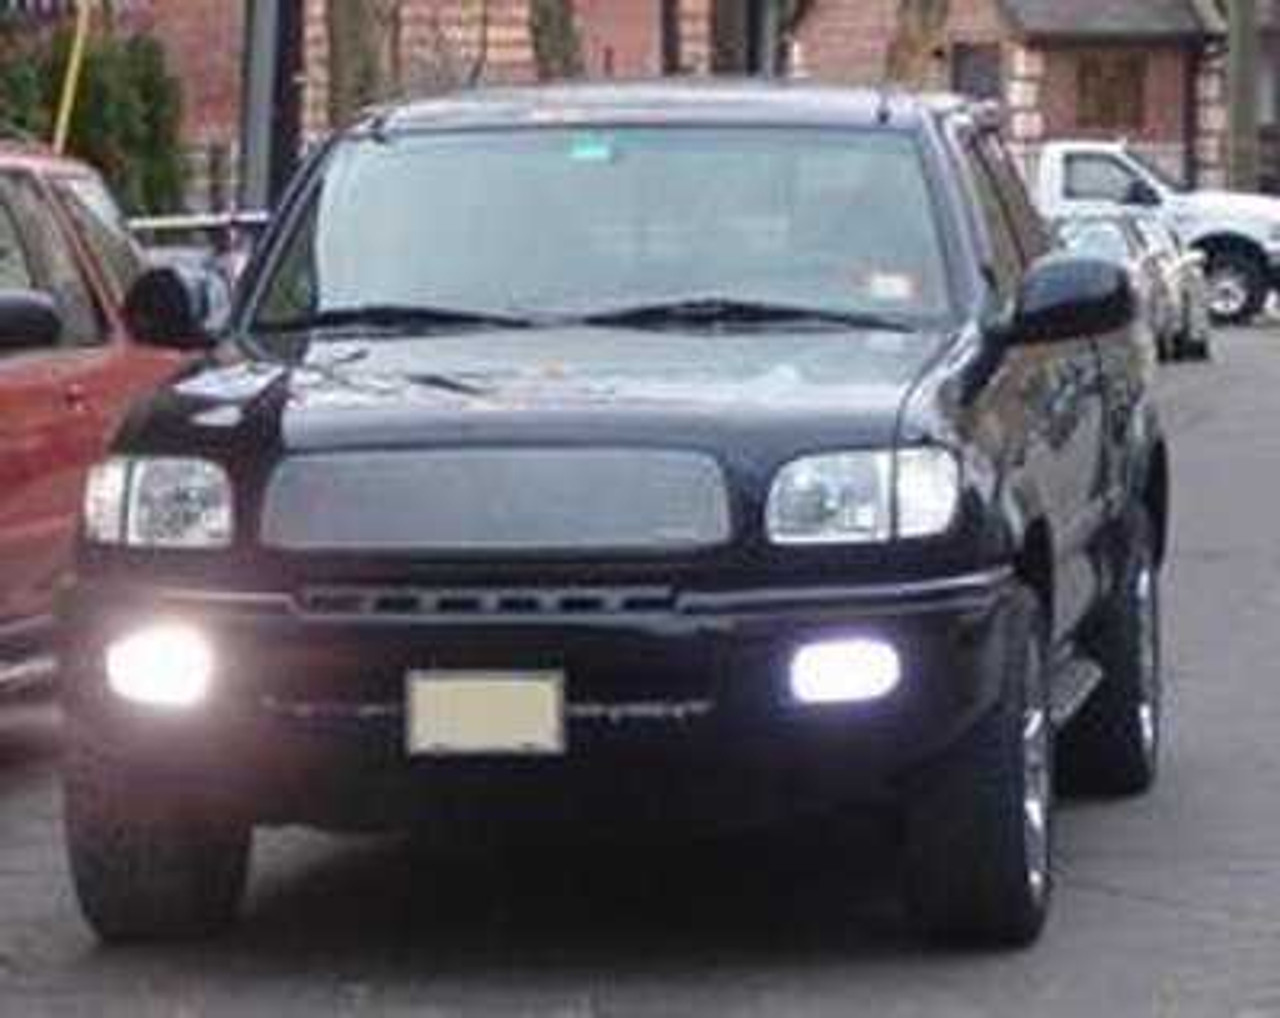 2000 2001 2002 Toyota Tundra White Fog Lamp Light Bulbs Bright Replacement Upgrade